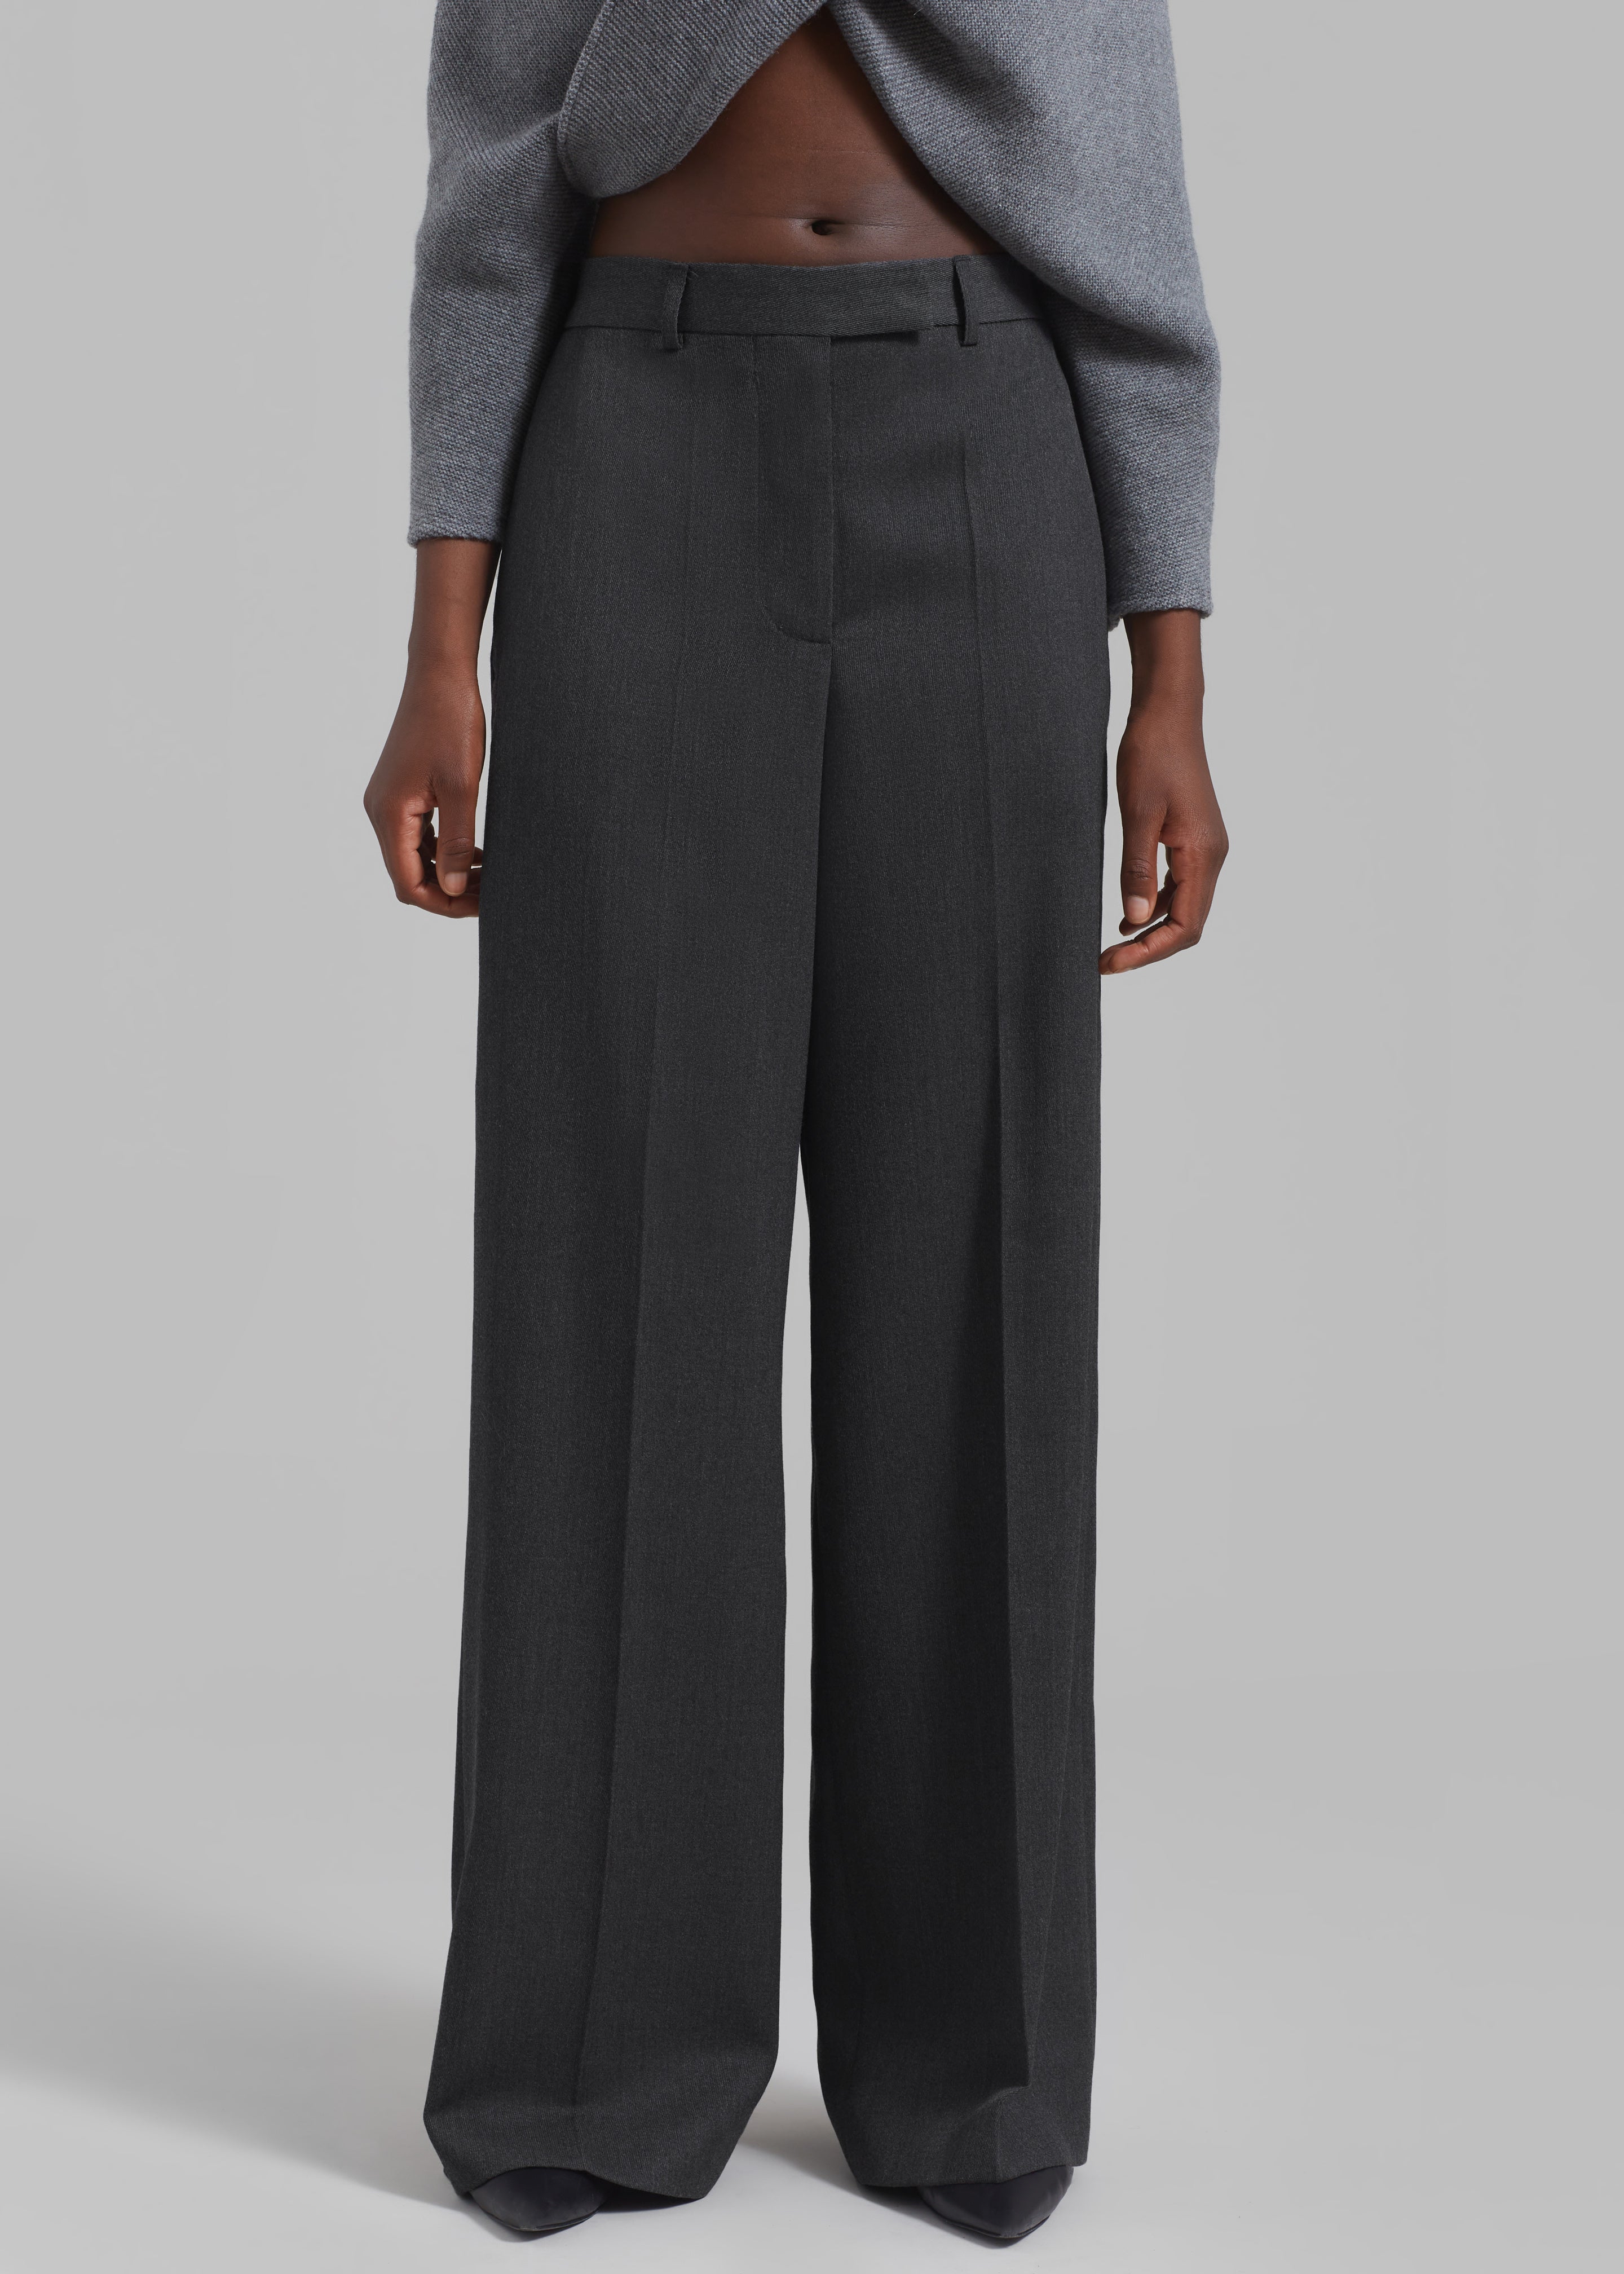 Buy GO COLORS Grey Melange Womens Stripes Mid Rise Trousers